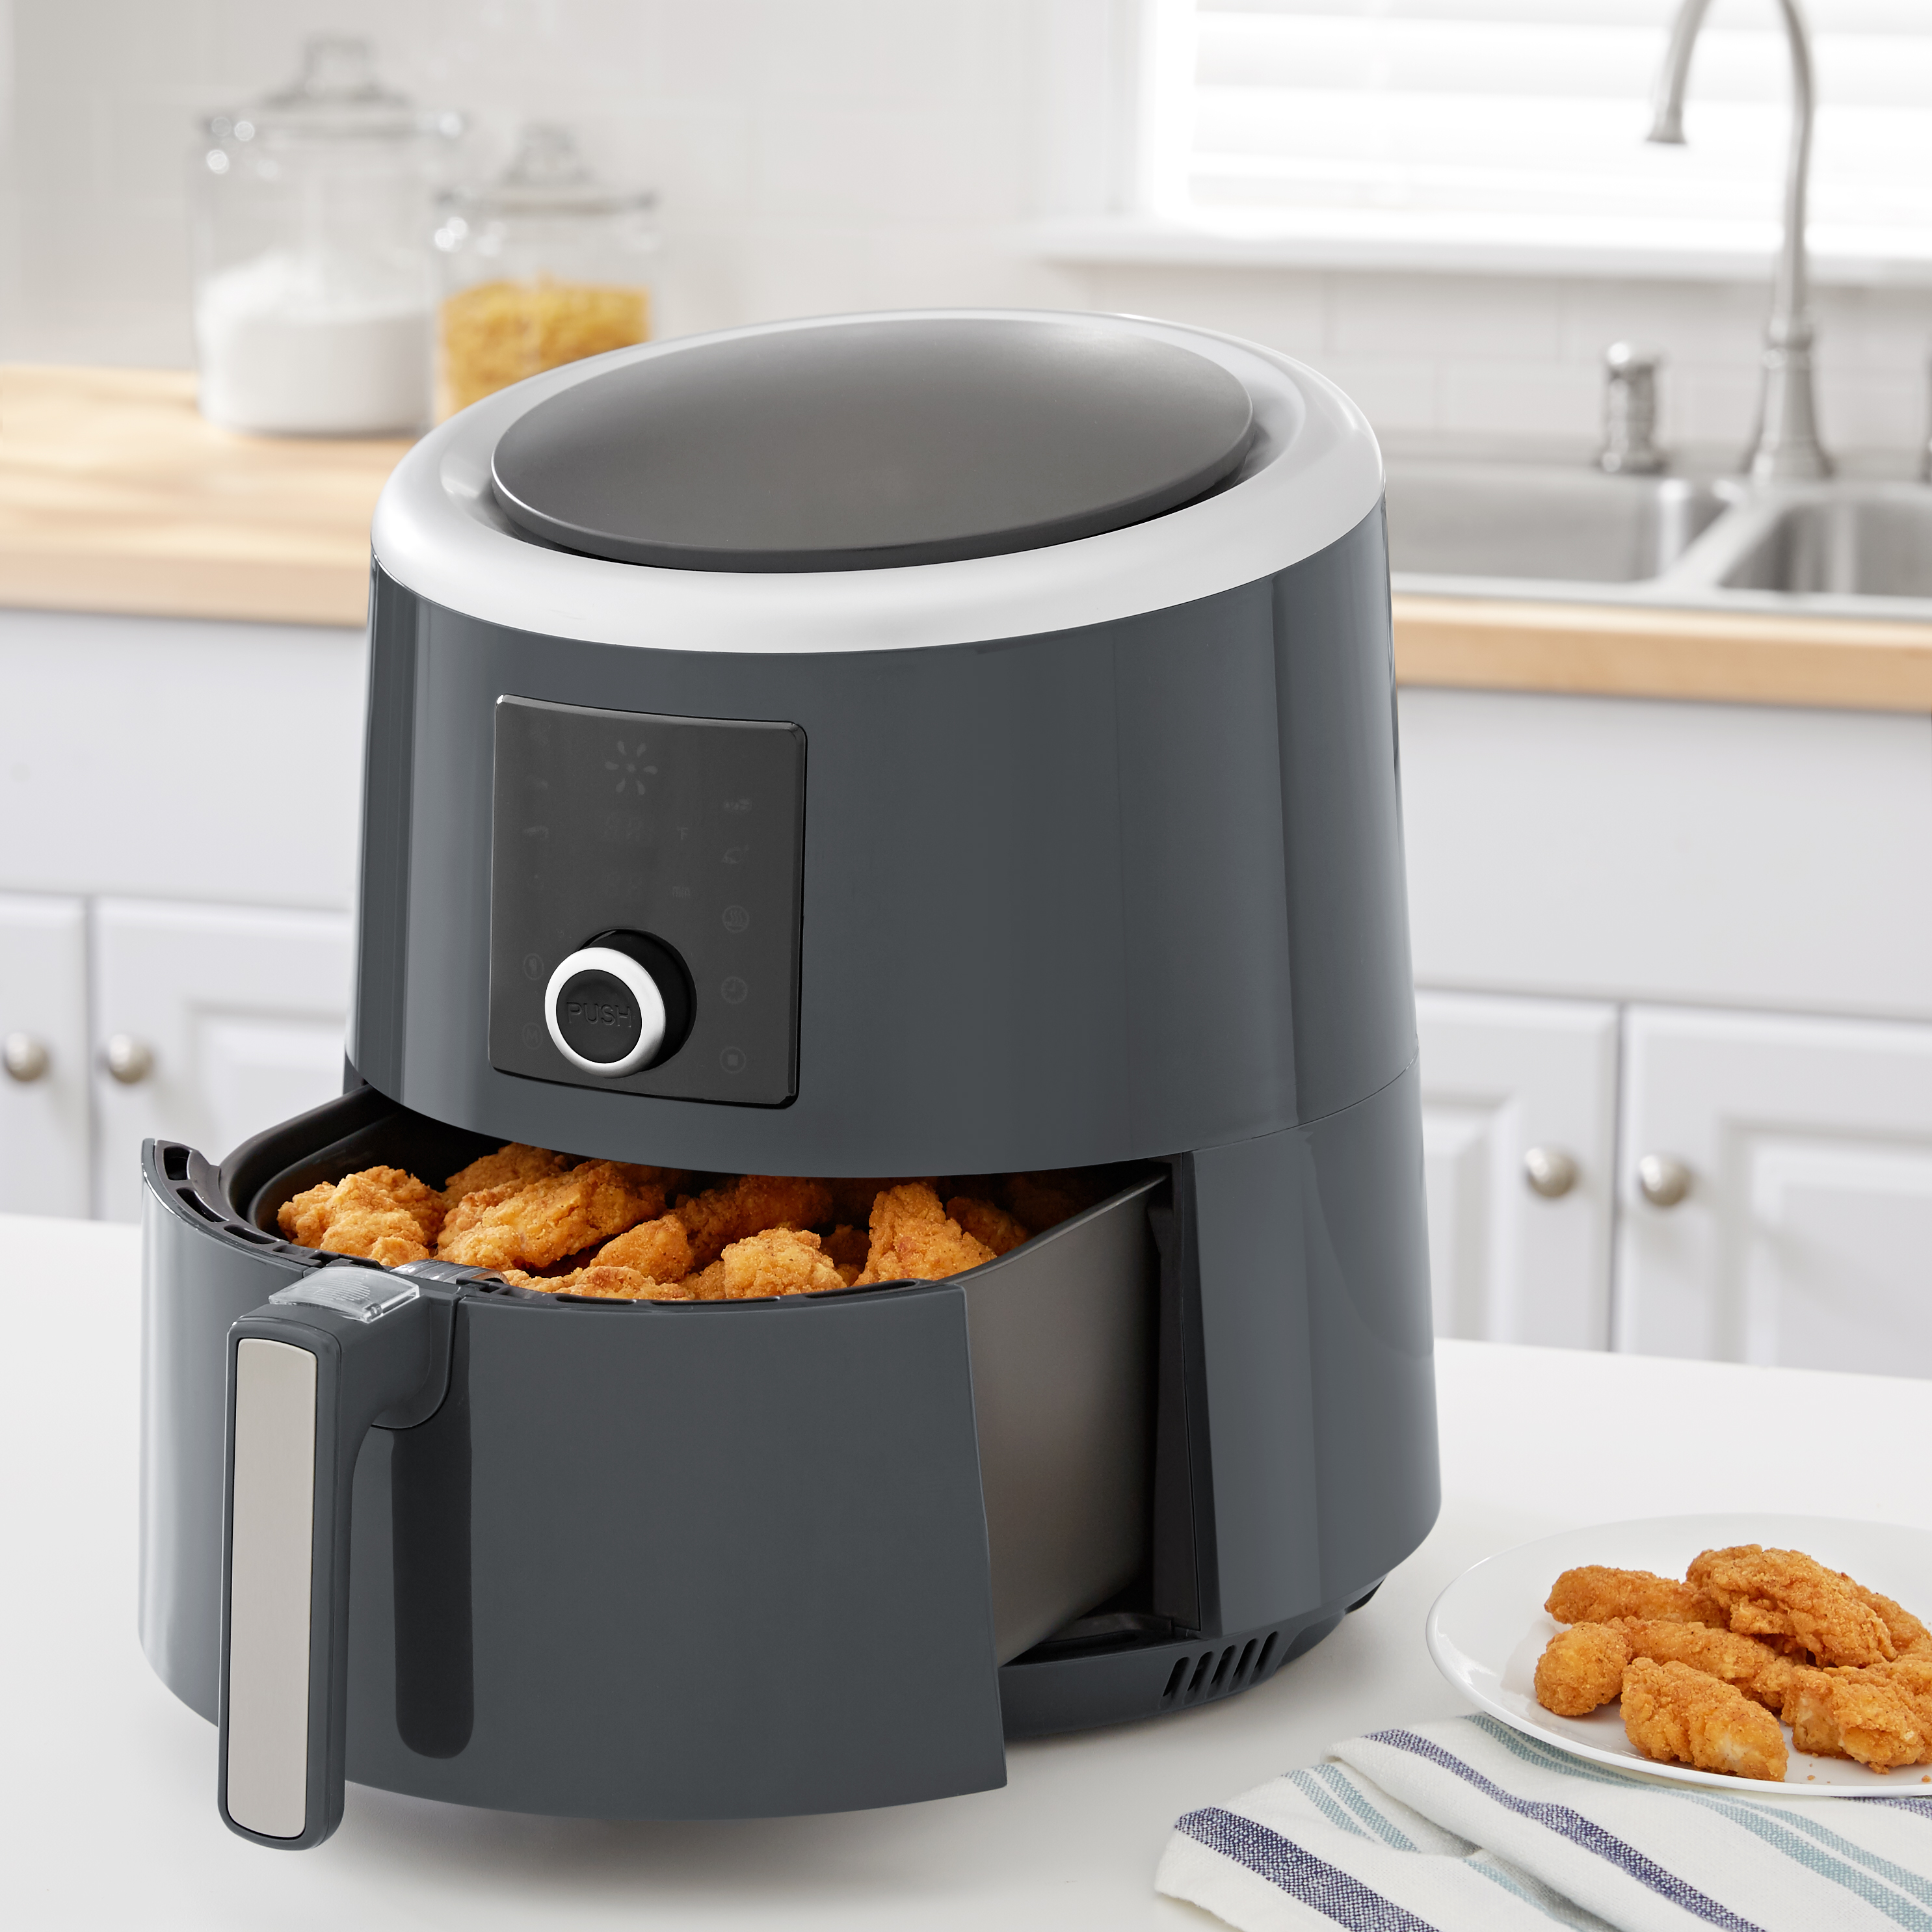 La Gourmet 6-Qt. Digital Air Fryer and Convection Oven, Charcoal - image 2 of 4